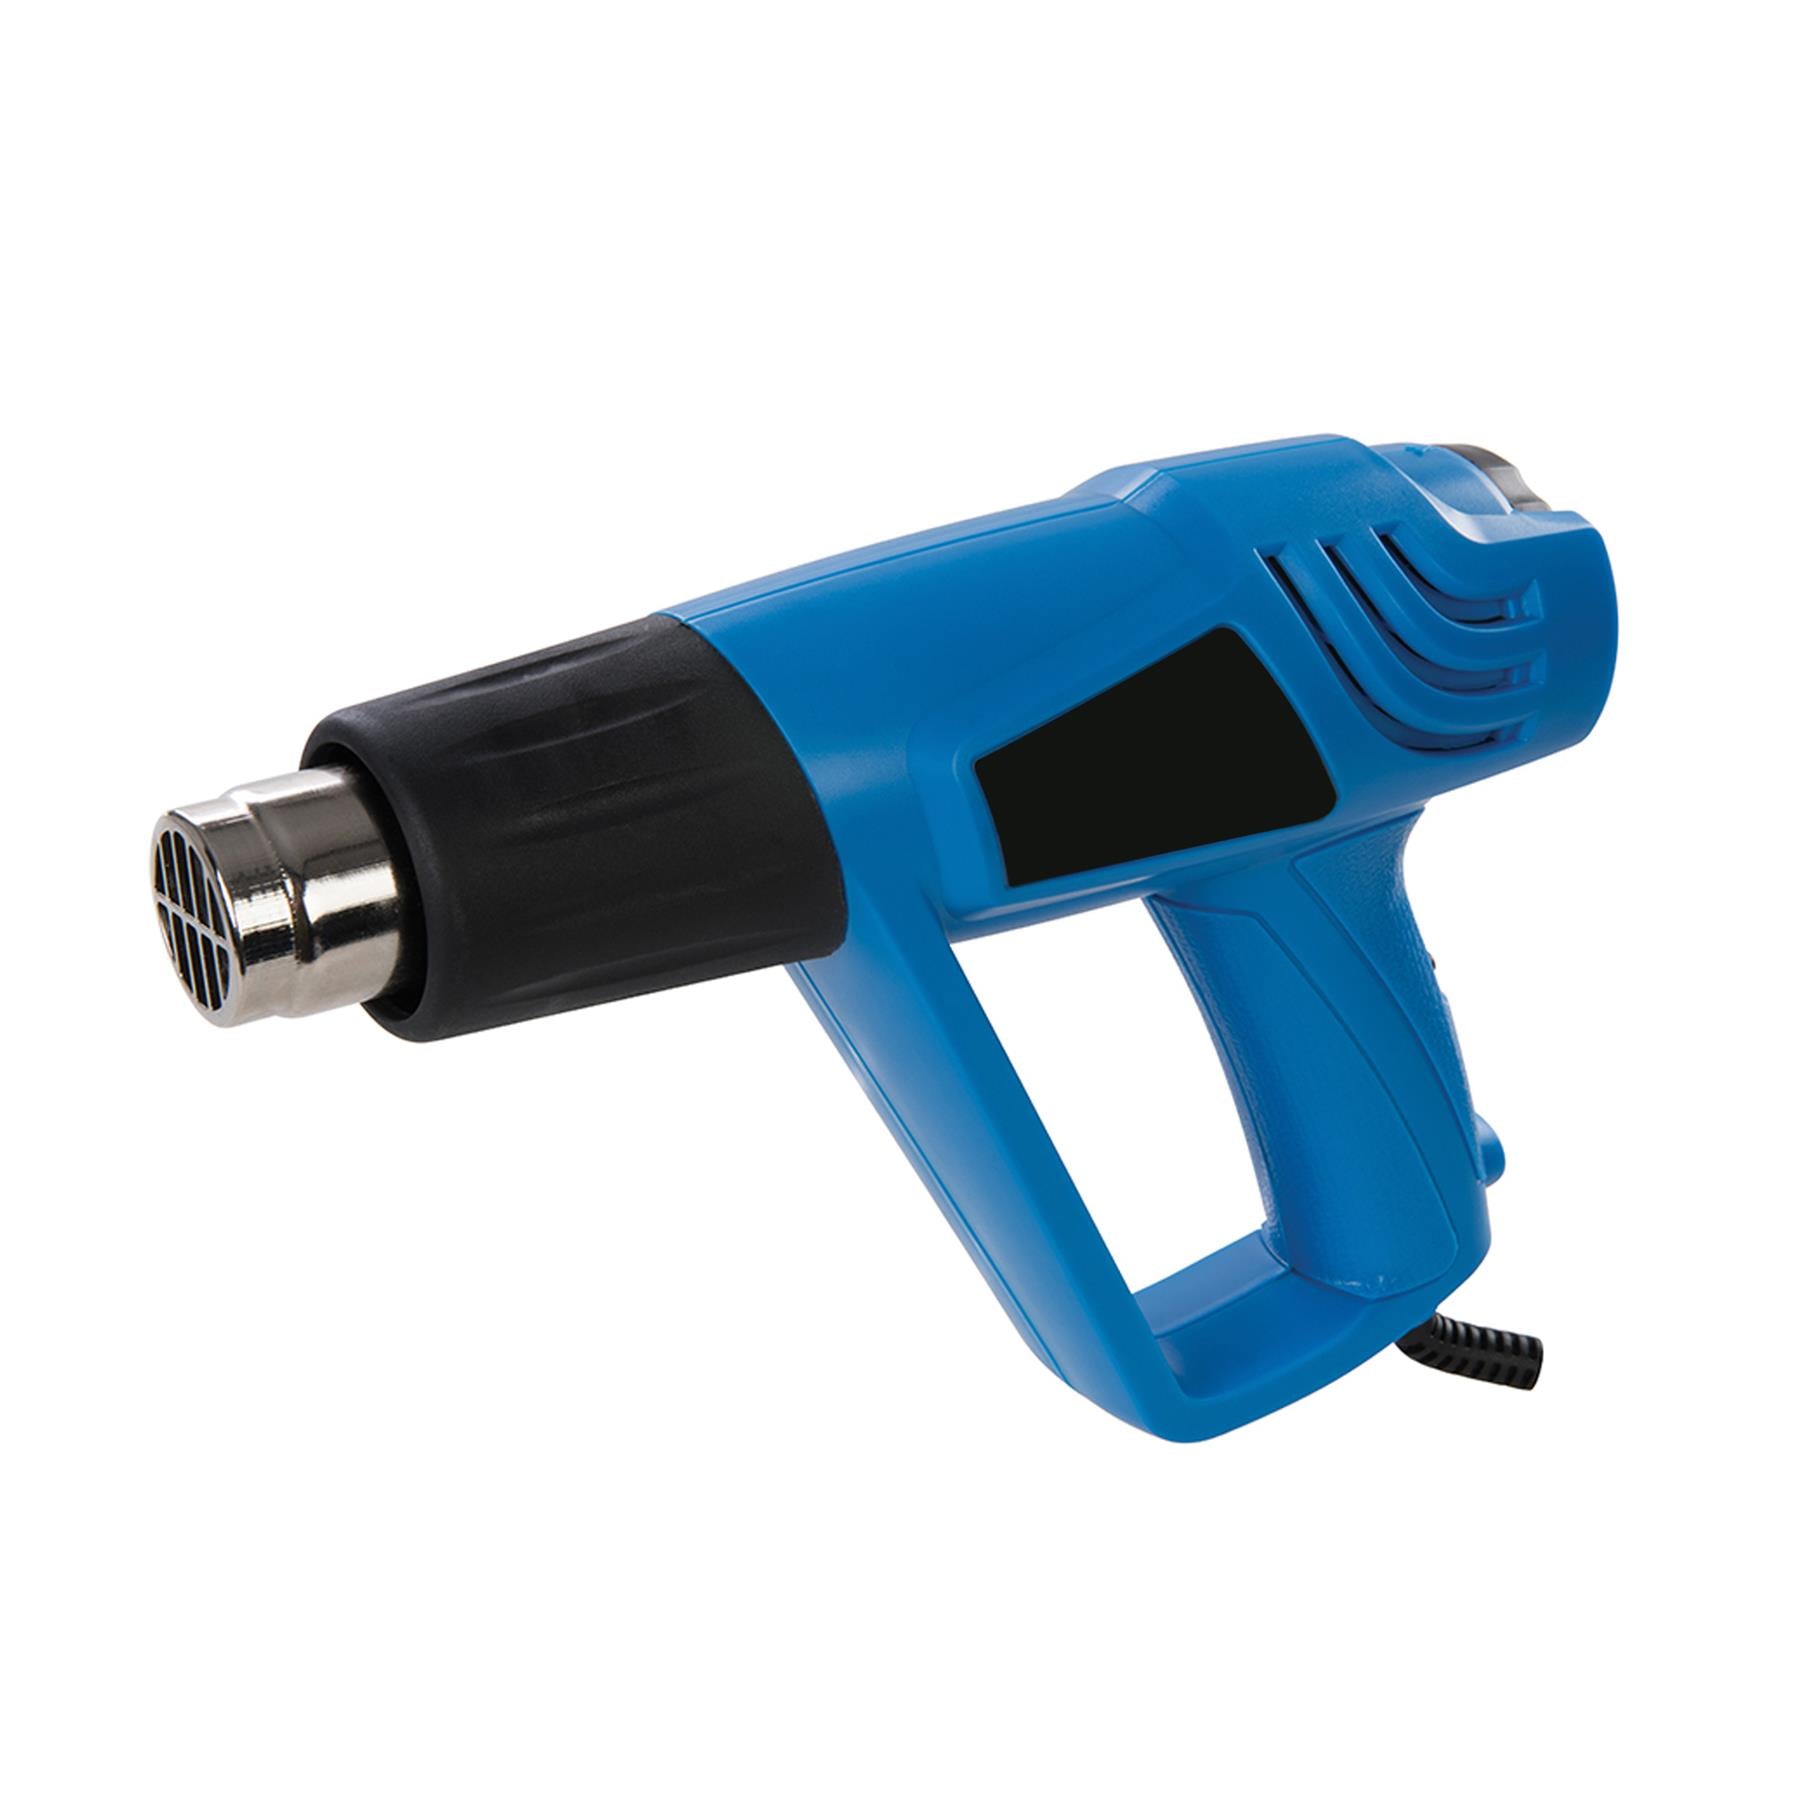 Professional Hot Air Gun Adjustable 2000W 600°C 125963 Paint Remover Heat Shrink